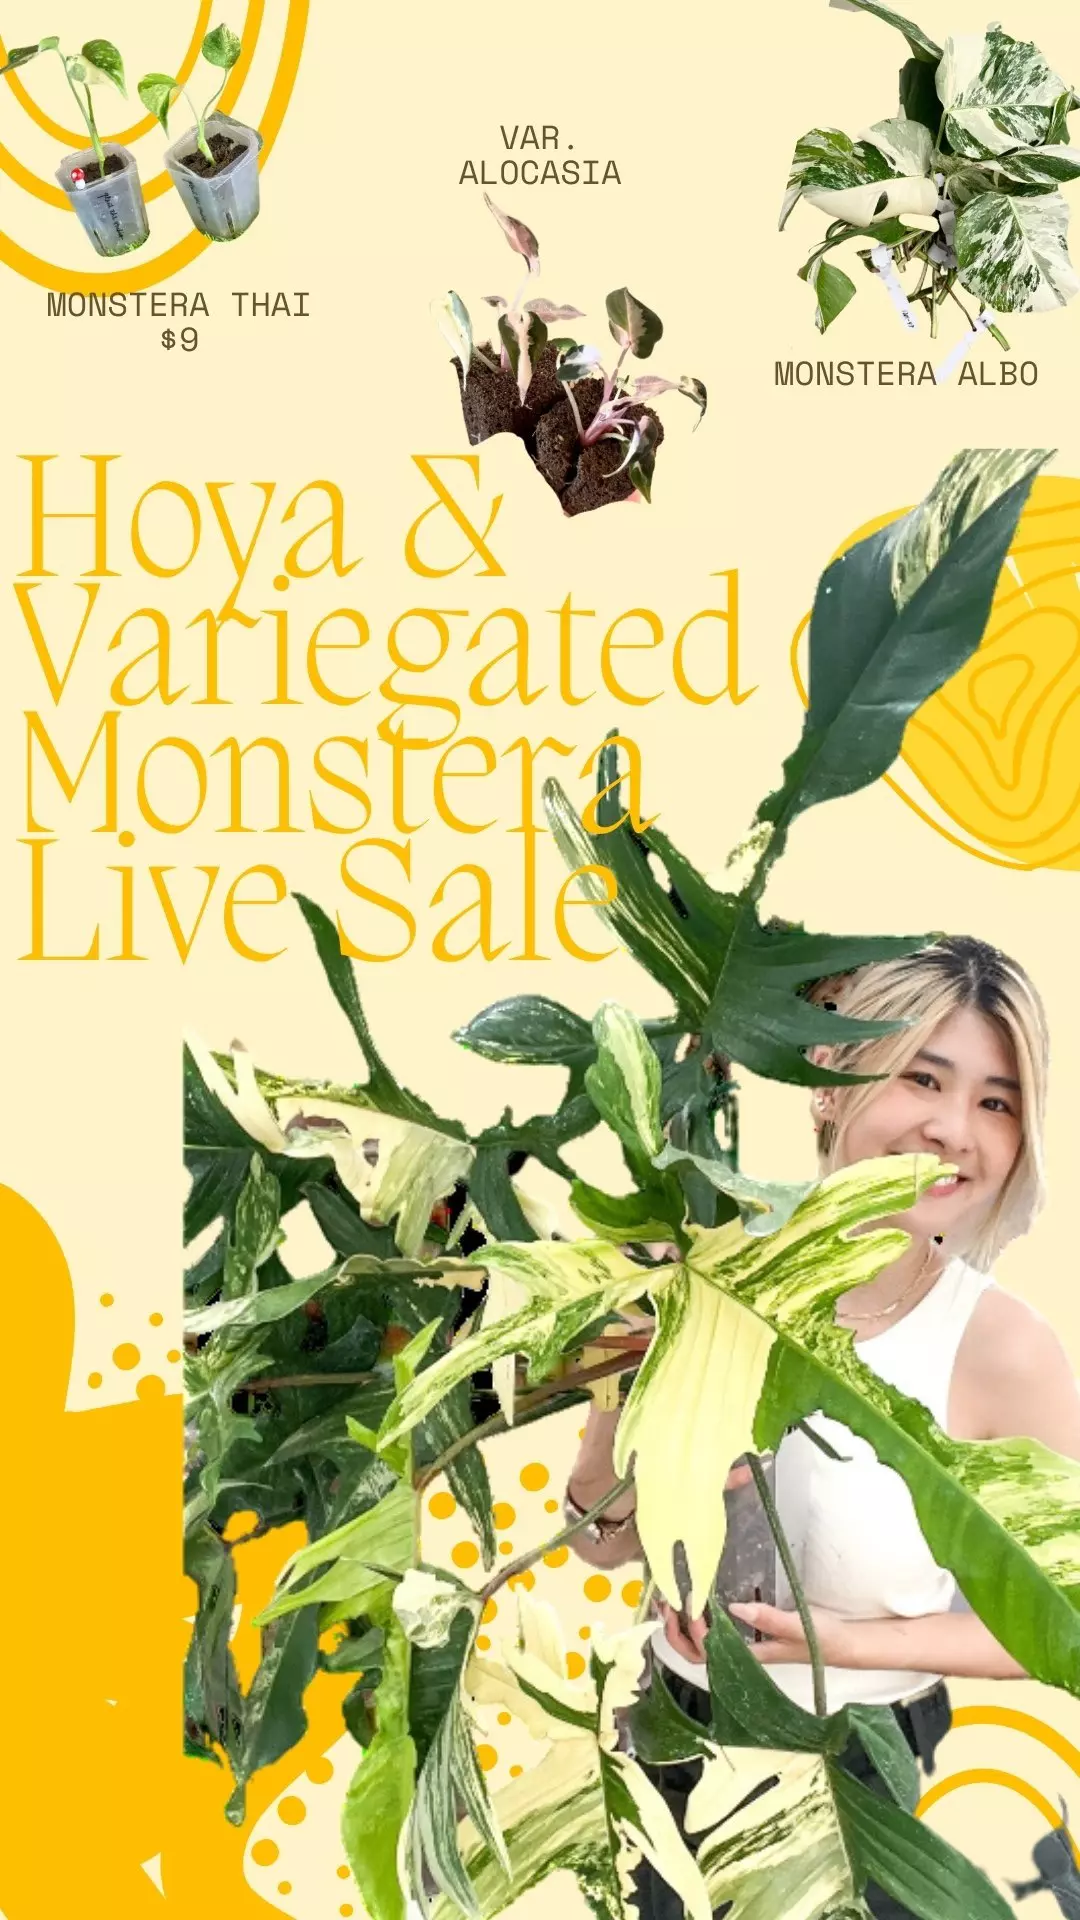 Variegated Monstera Live Sale!